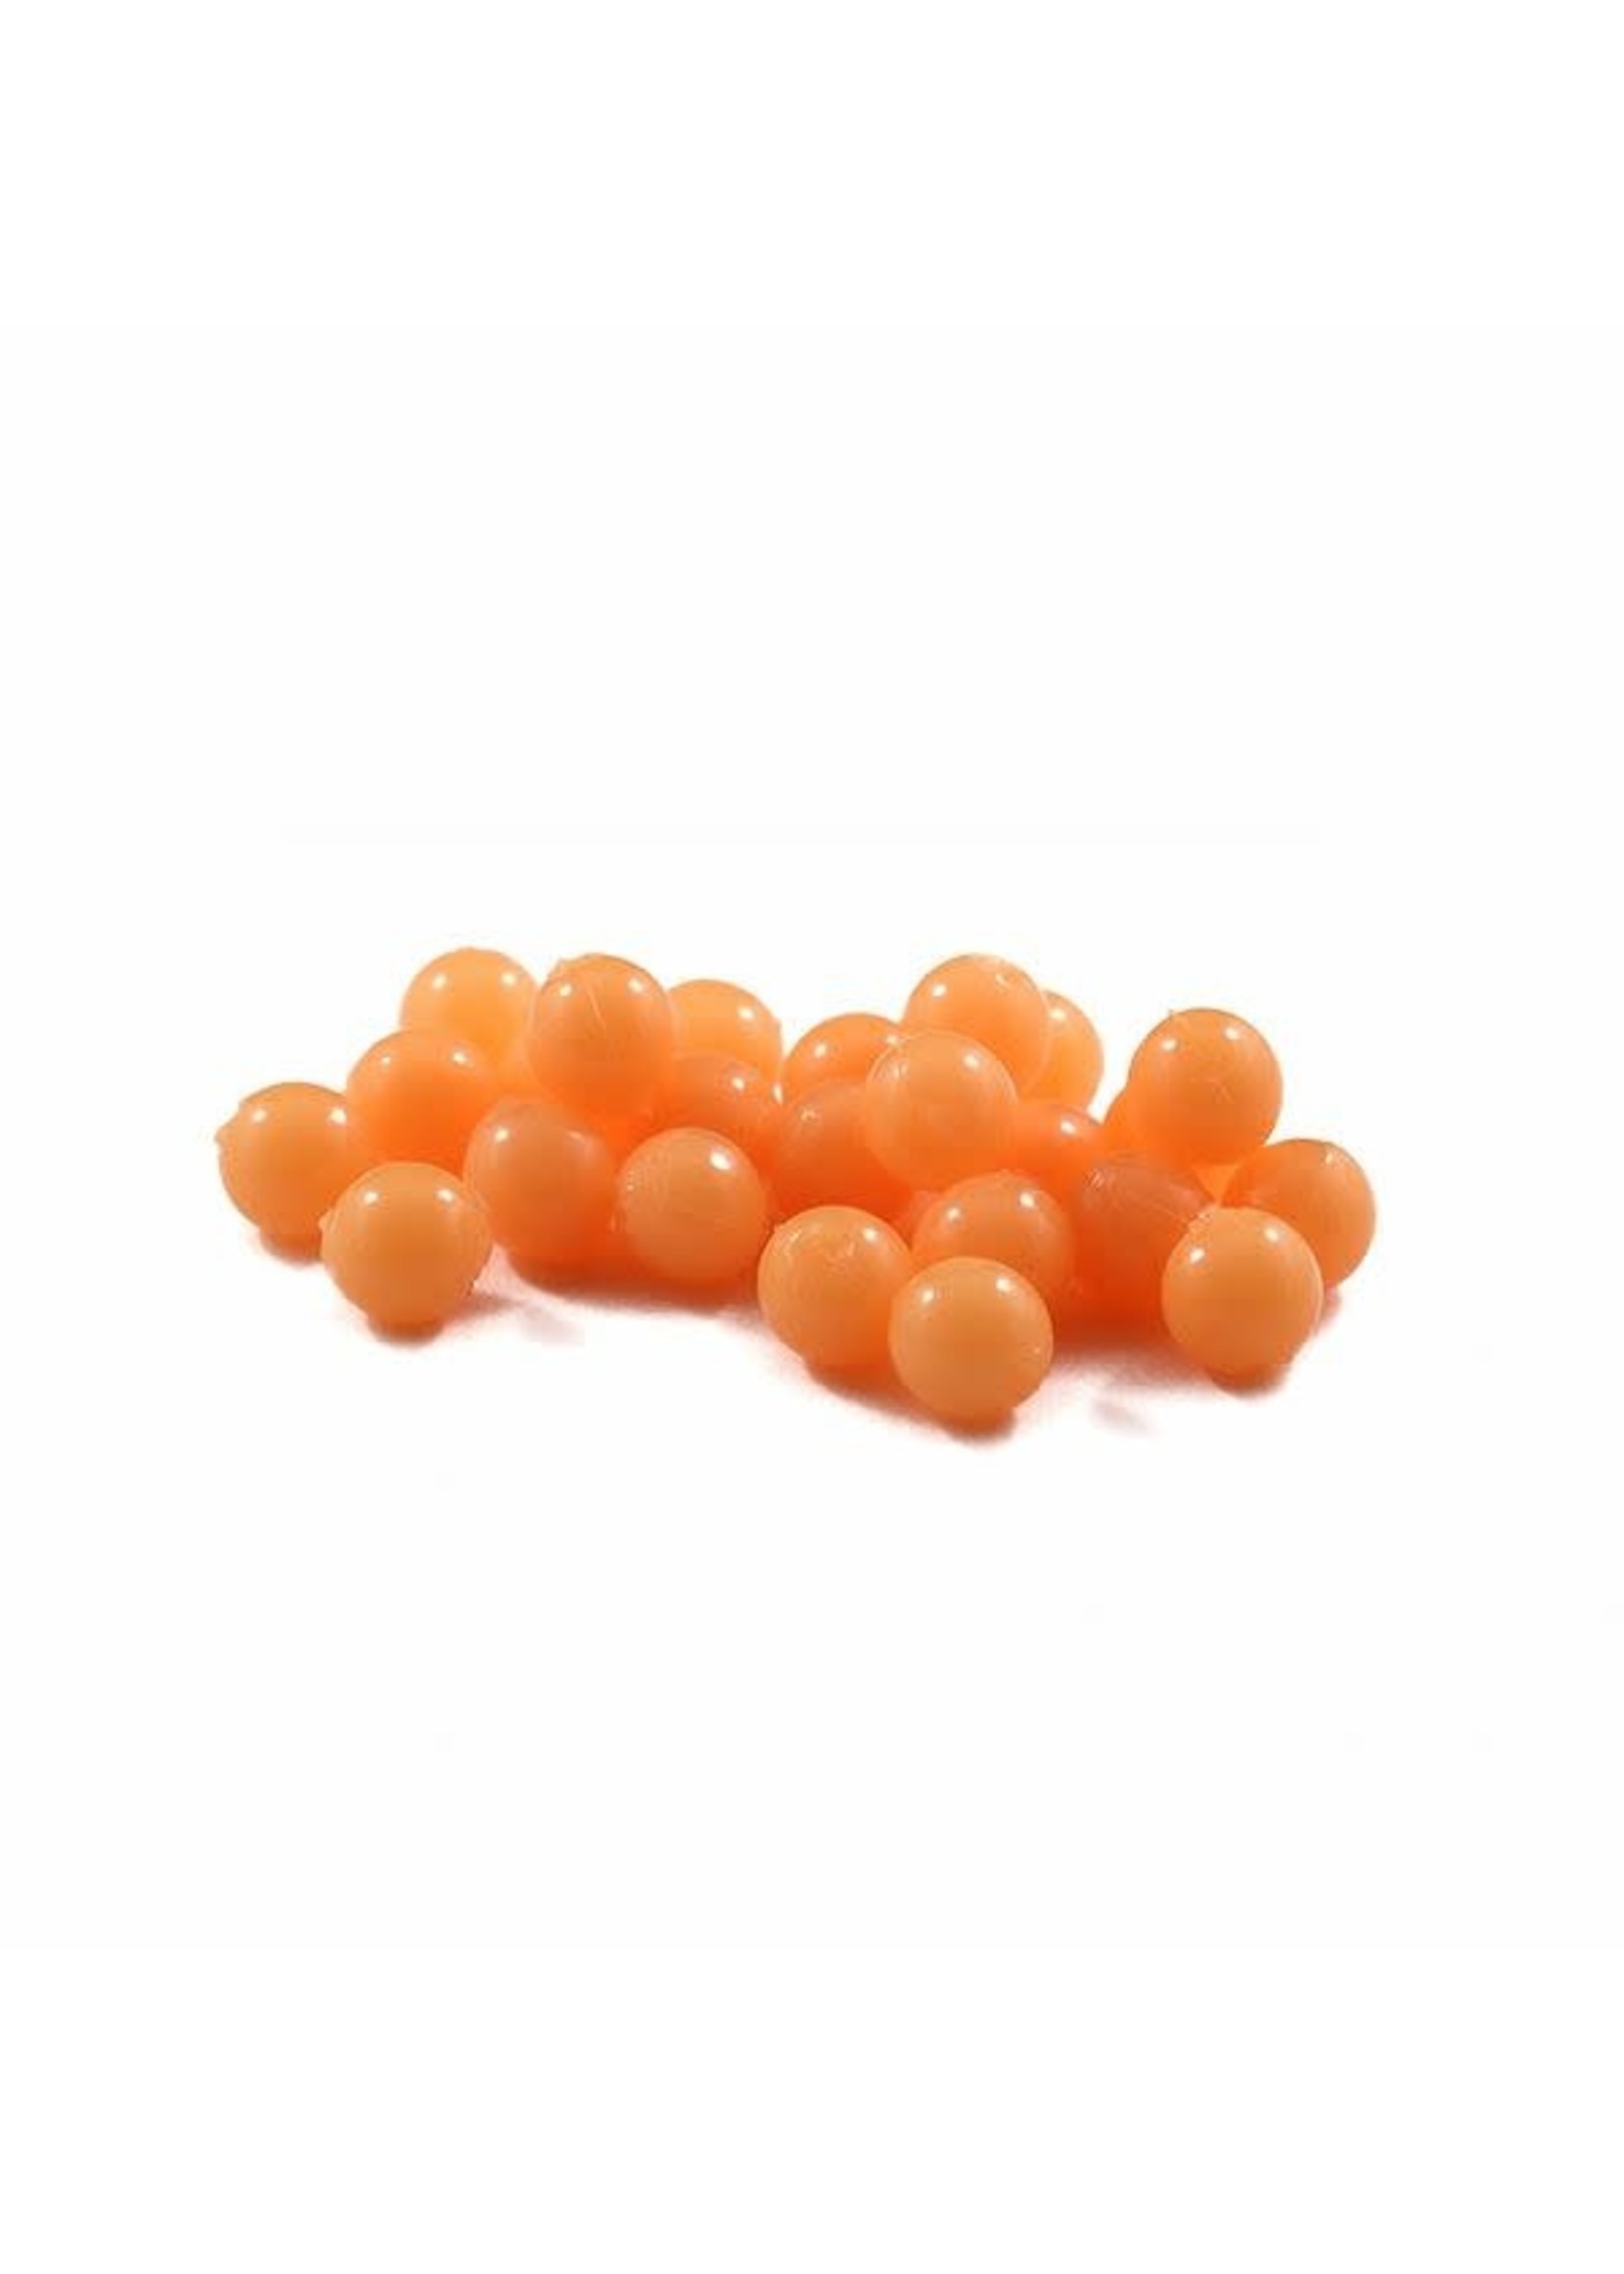 Cleardrift Cleardrift Glow Soft Beads Fuzzy Peach 6mm